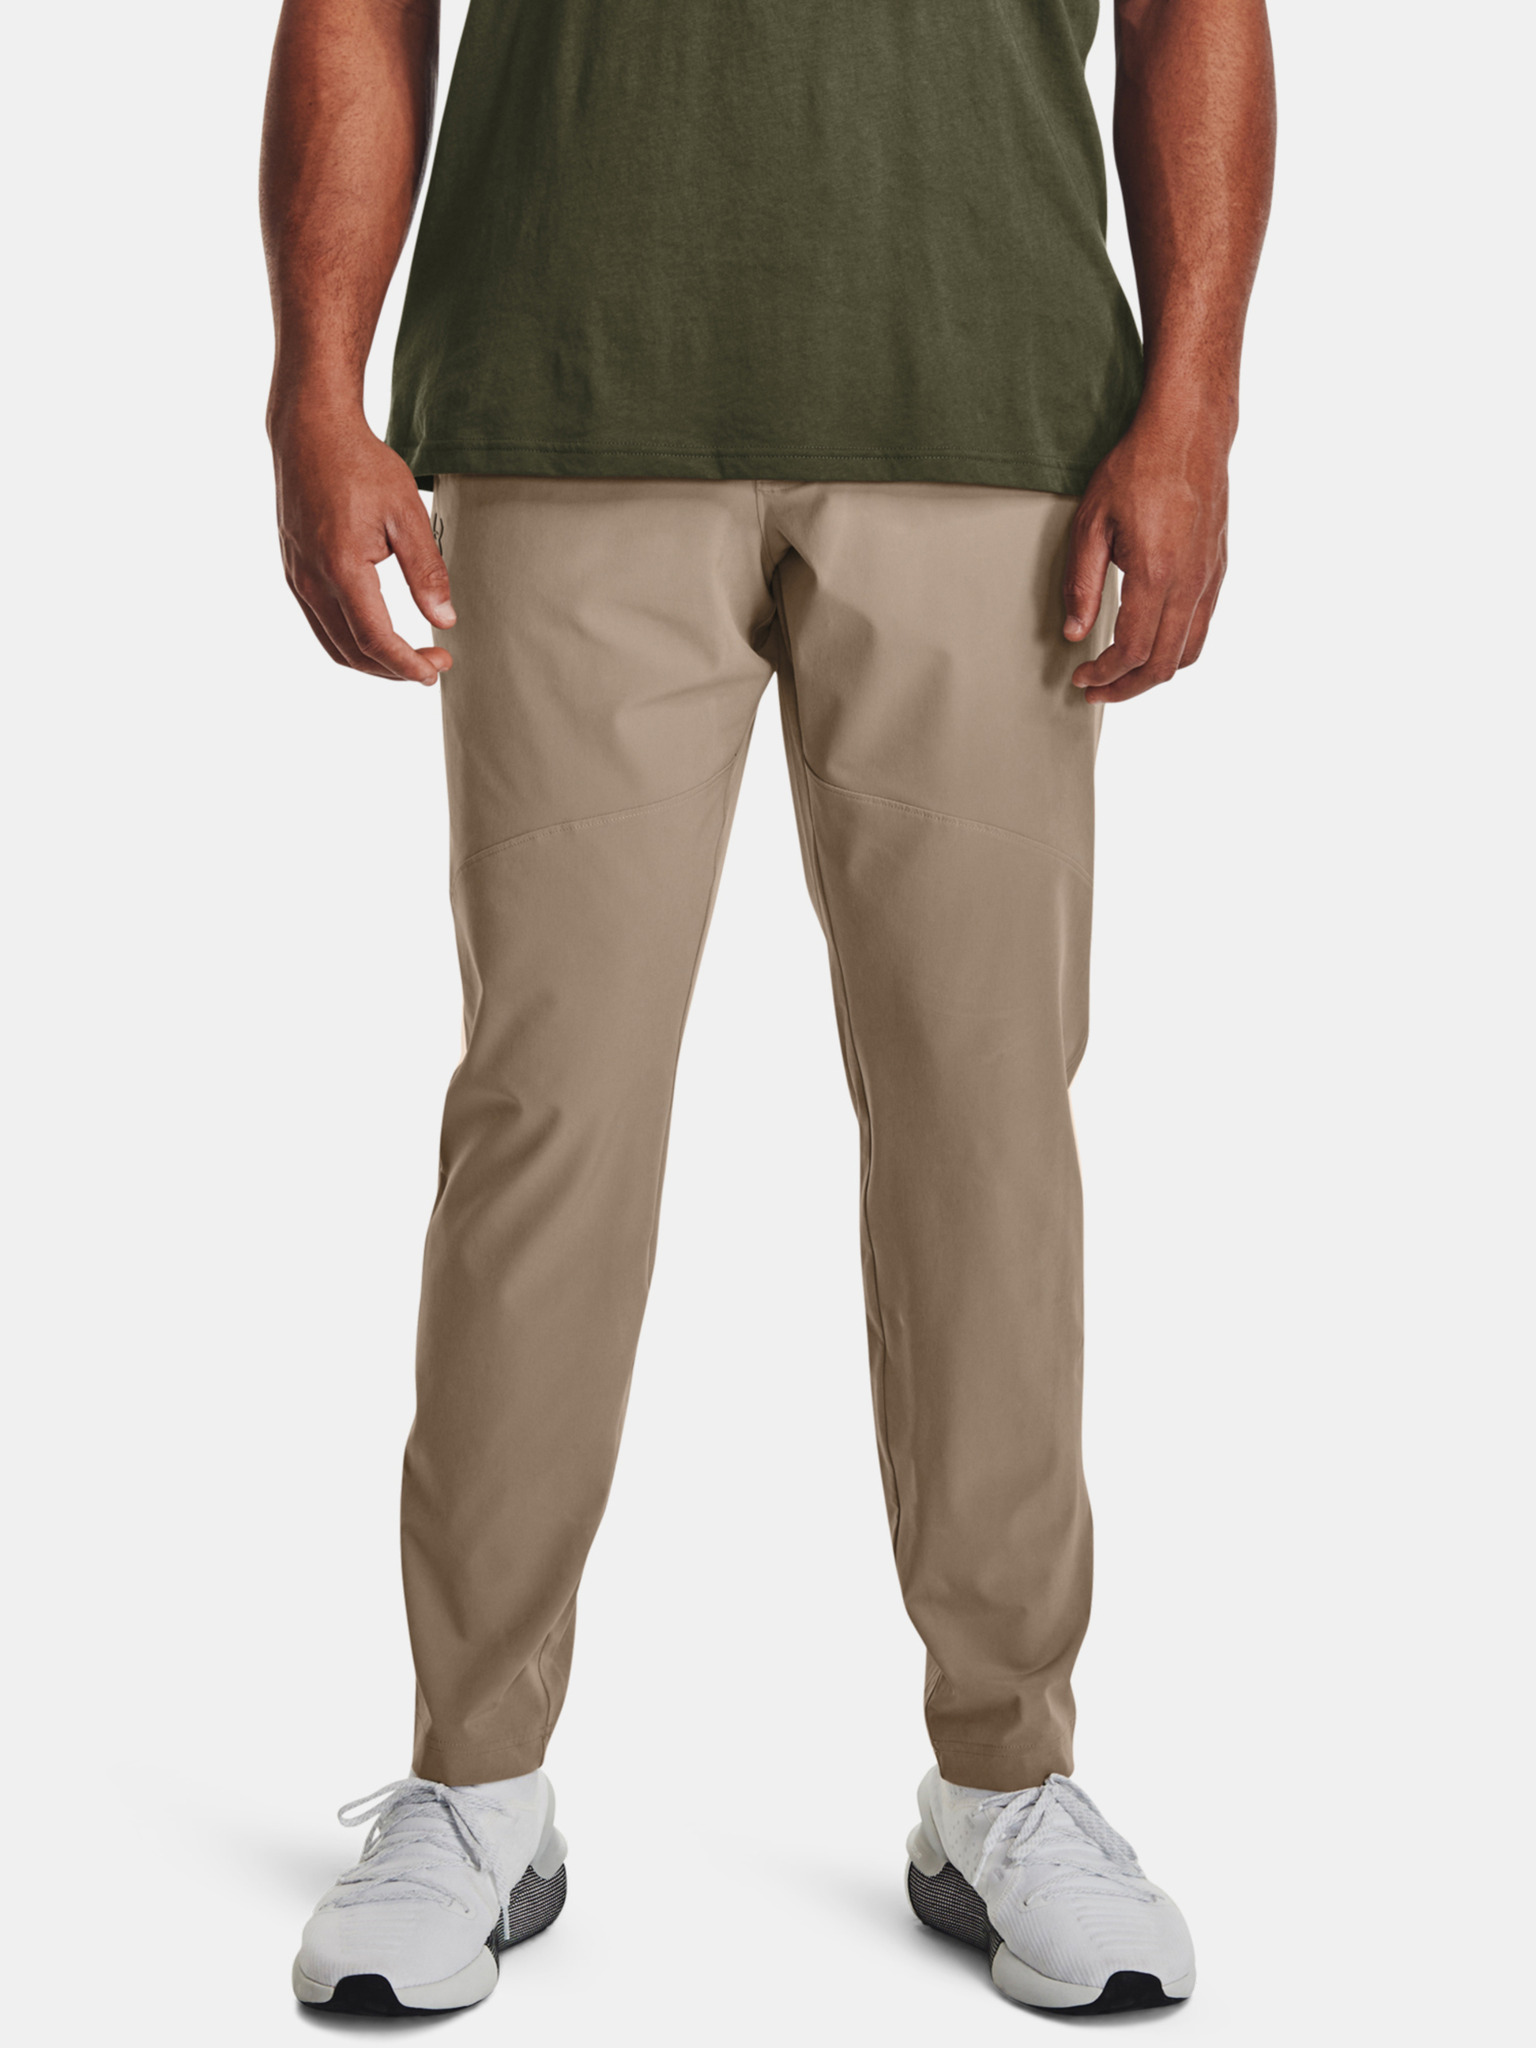 Under Armour Mens UA Stretch Woven Pants Sweatpants 1366215 - New